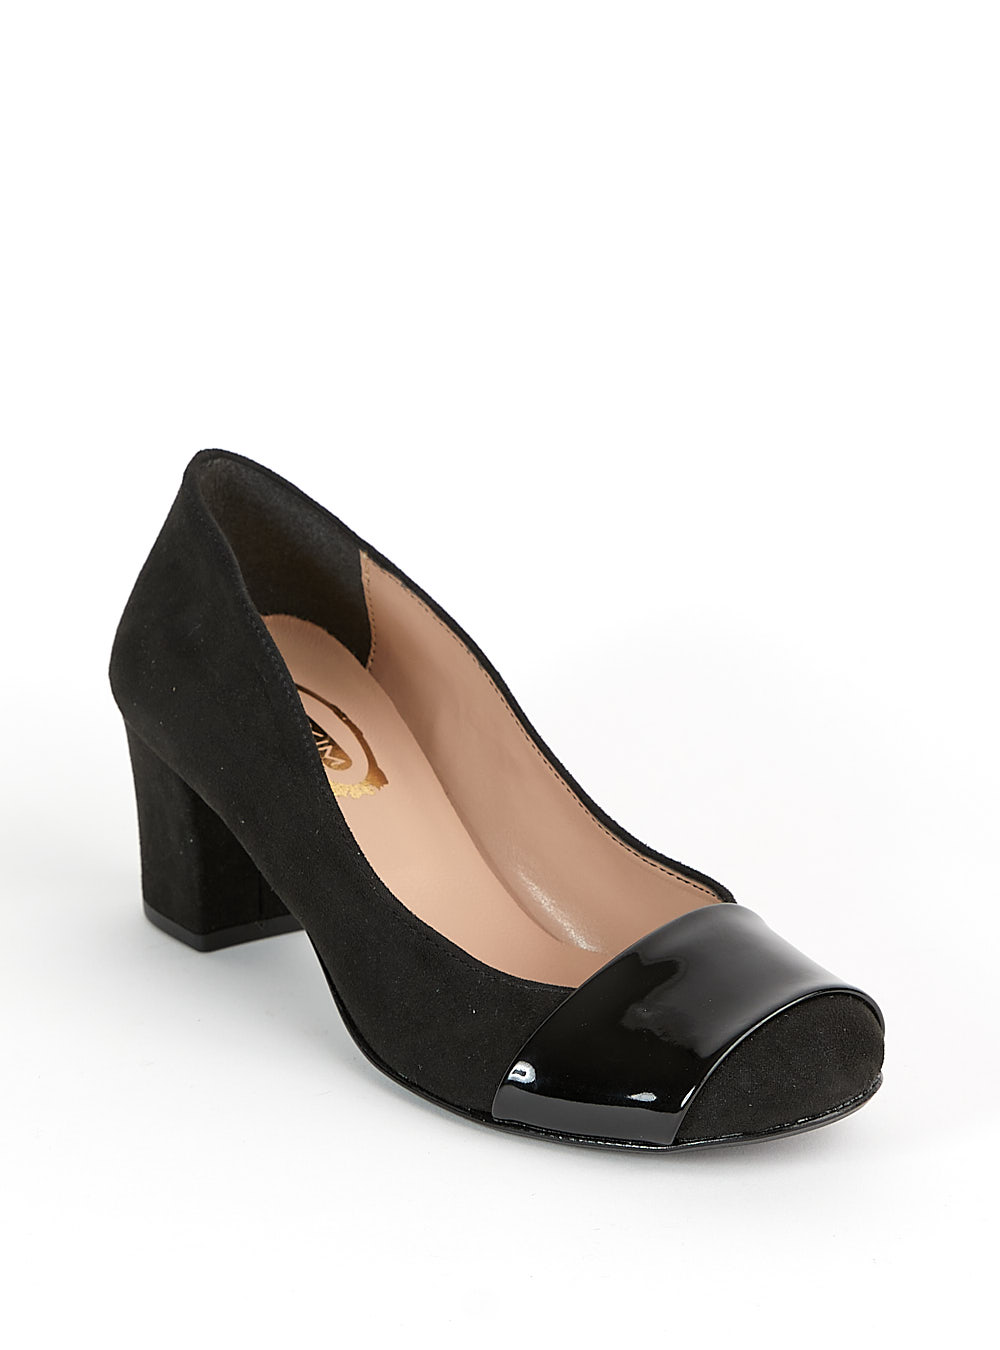 Round Toe Suede Heels for sale | eBay